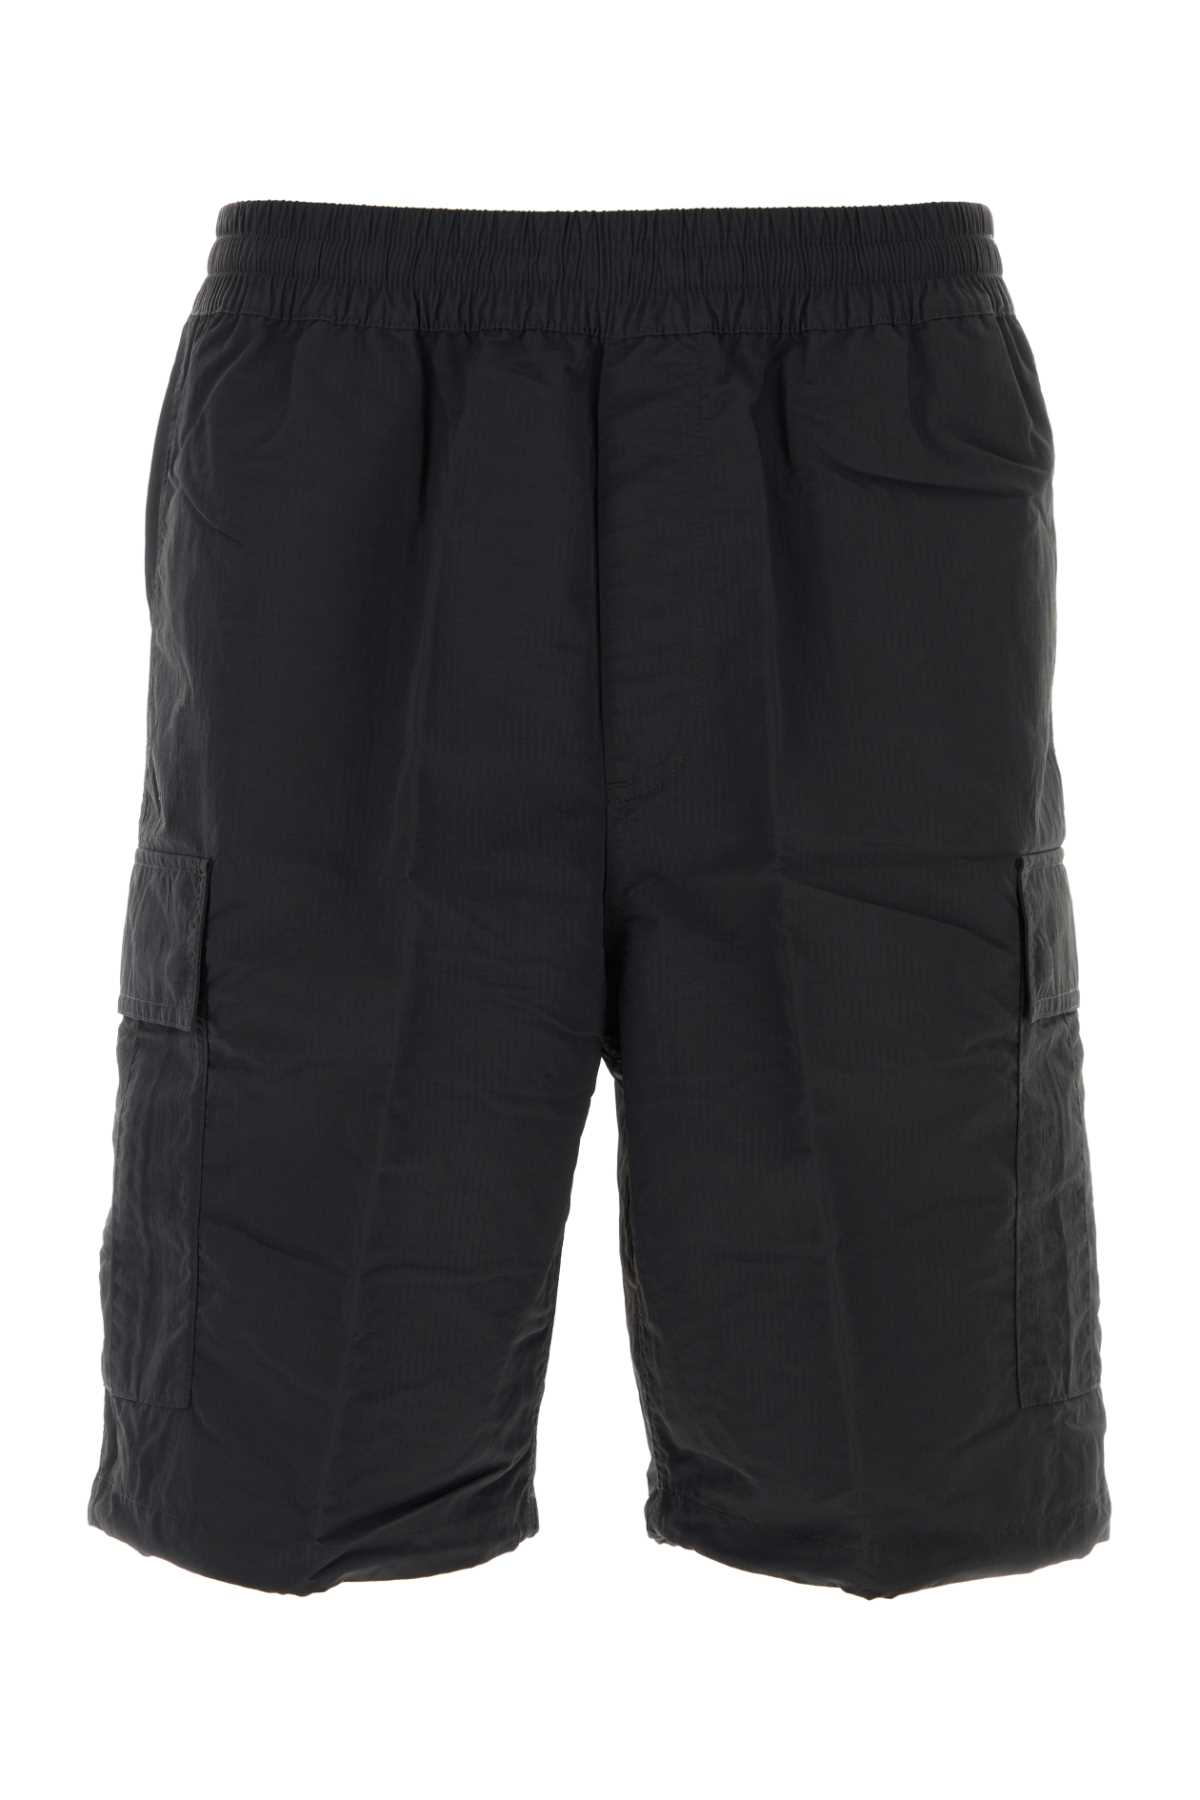 Carhartt Black Nylon Evers Cargo Shorts In Isimardinpriwhi